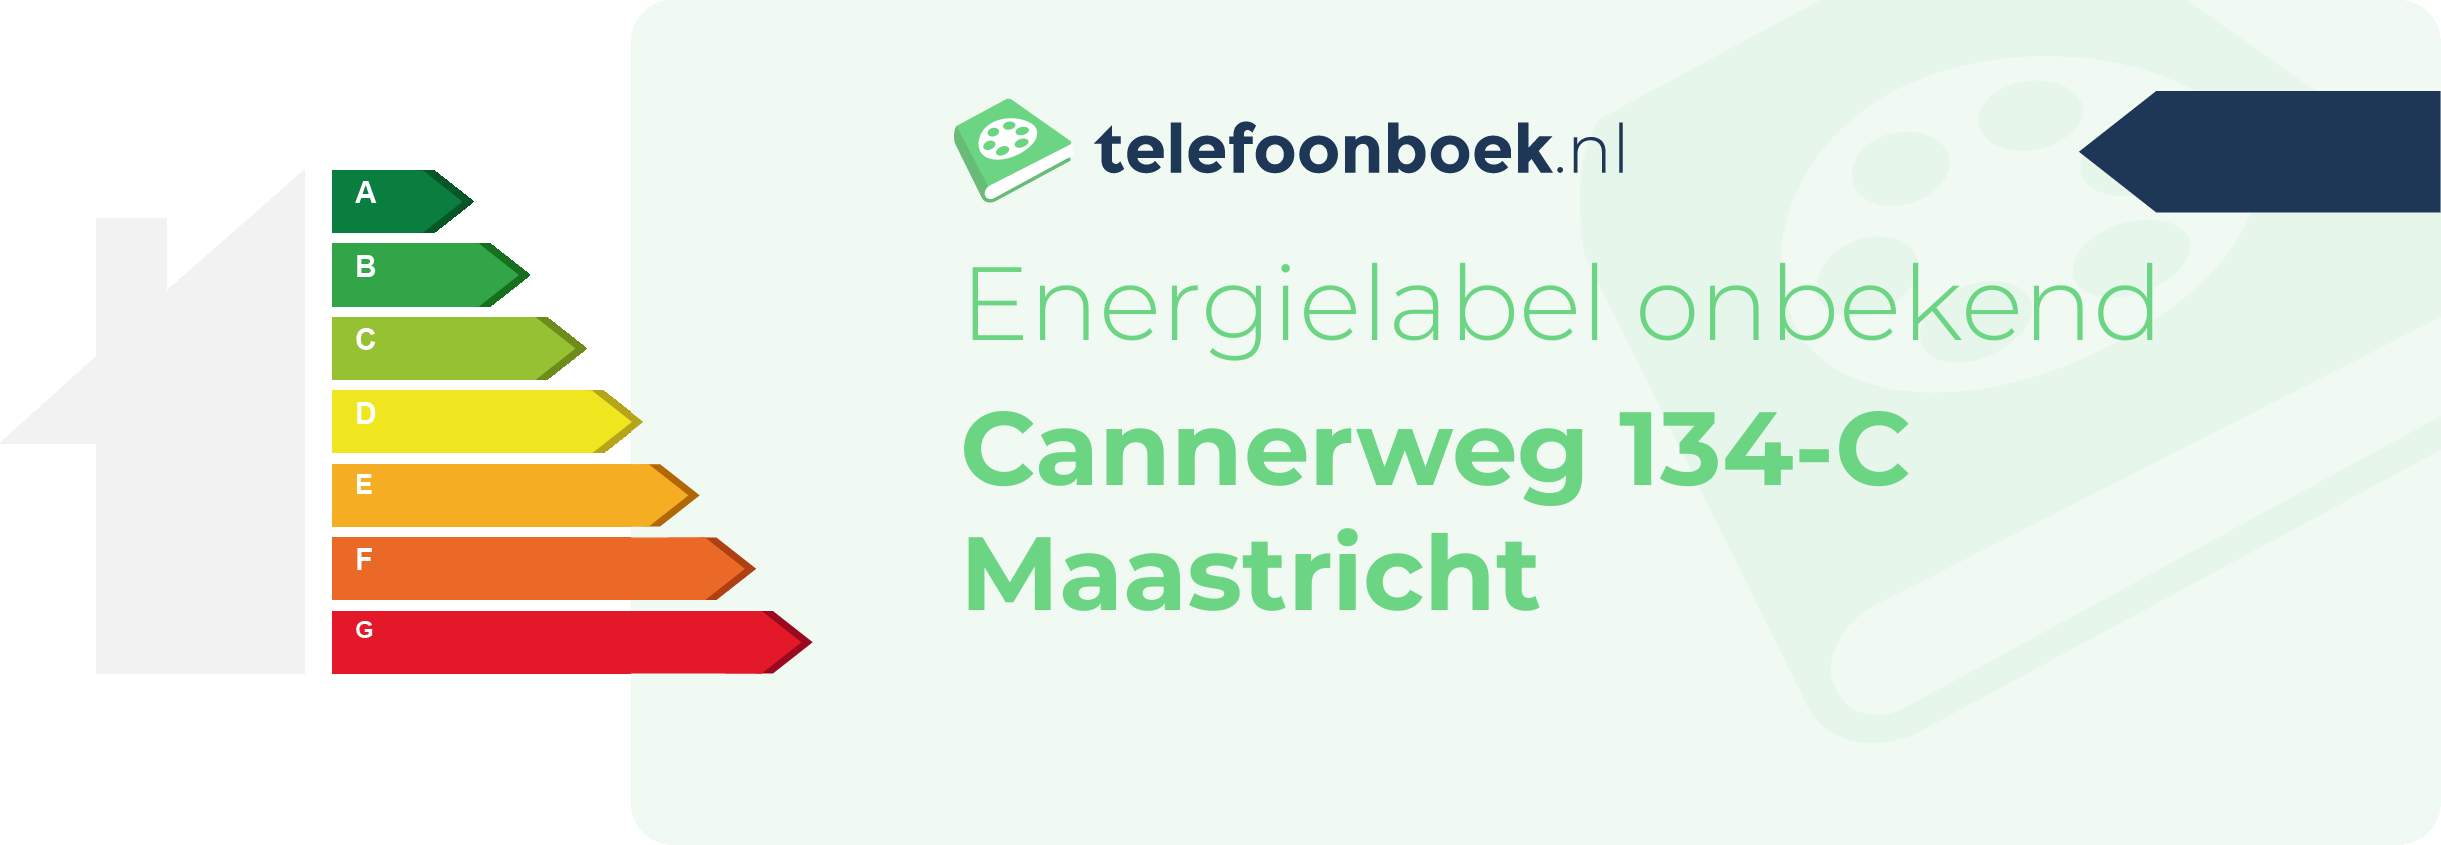 Energielabel Cannerweg 134-C Maastricht